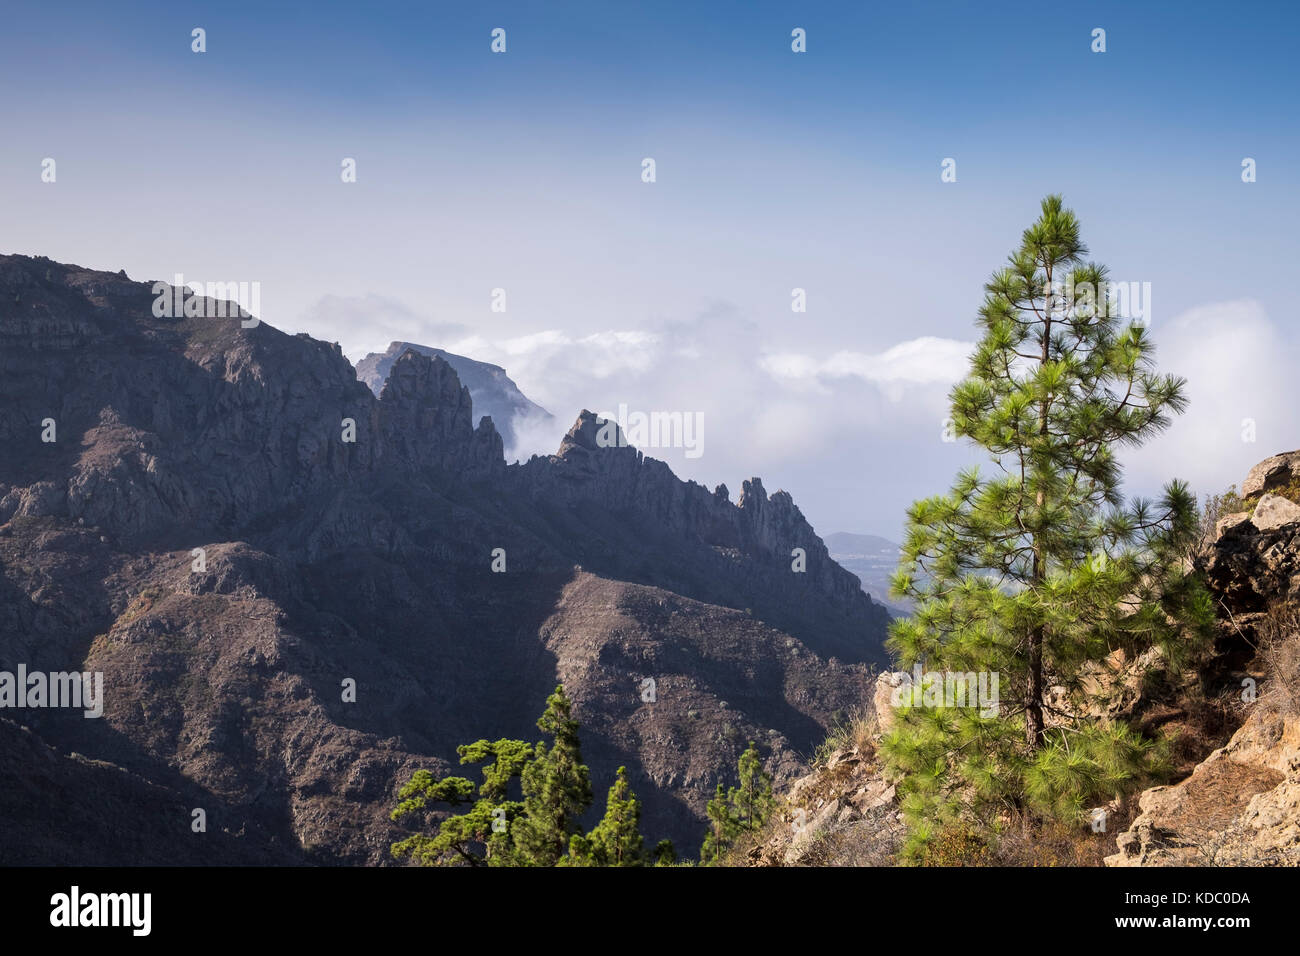 Barranco de los Fuentes in Adeje, looking towards the west coast of Tenerife, from Ifonche, Canary Islands, Spain Stock Photo